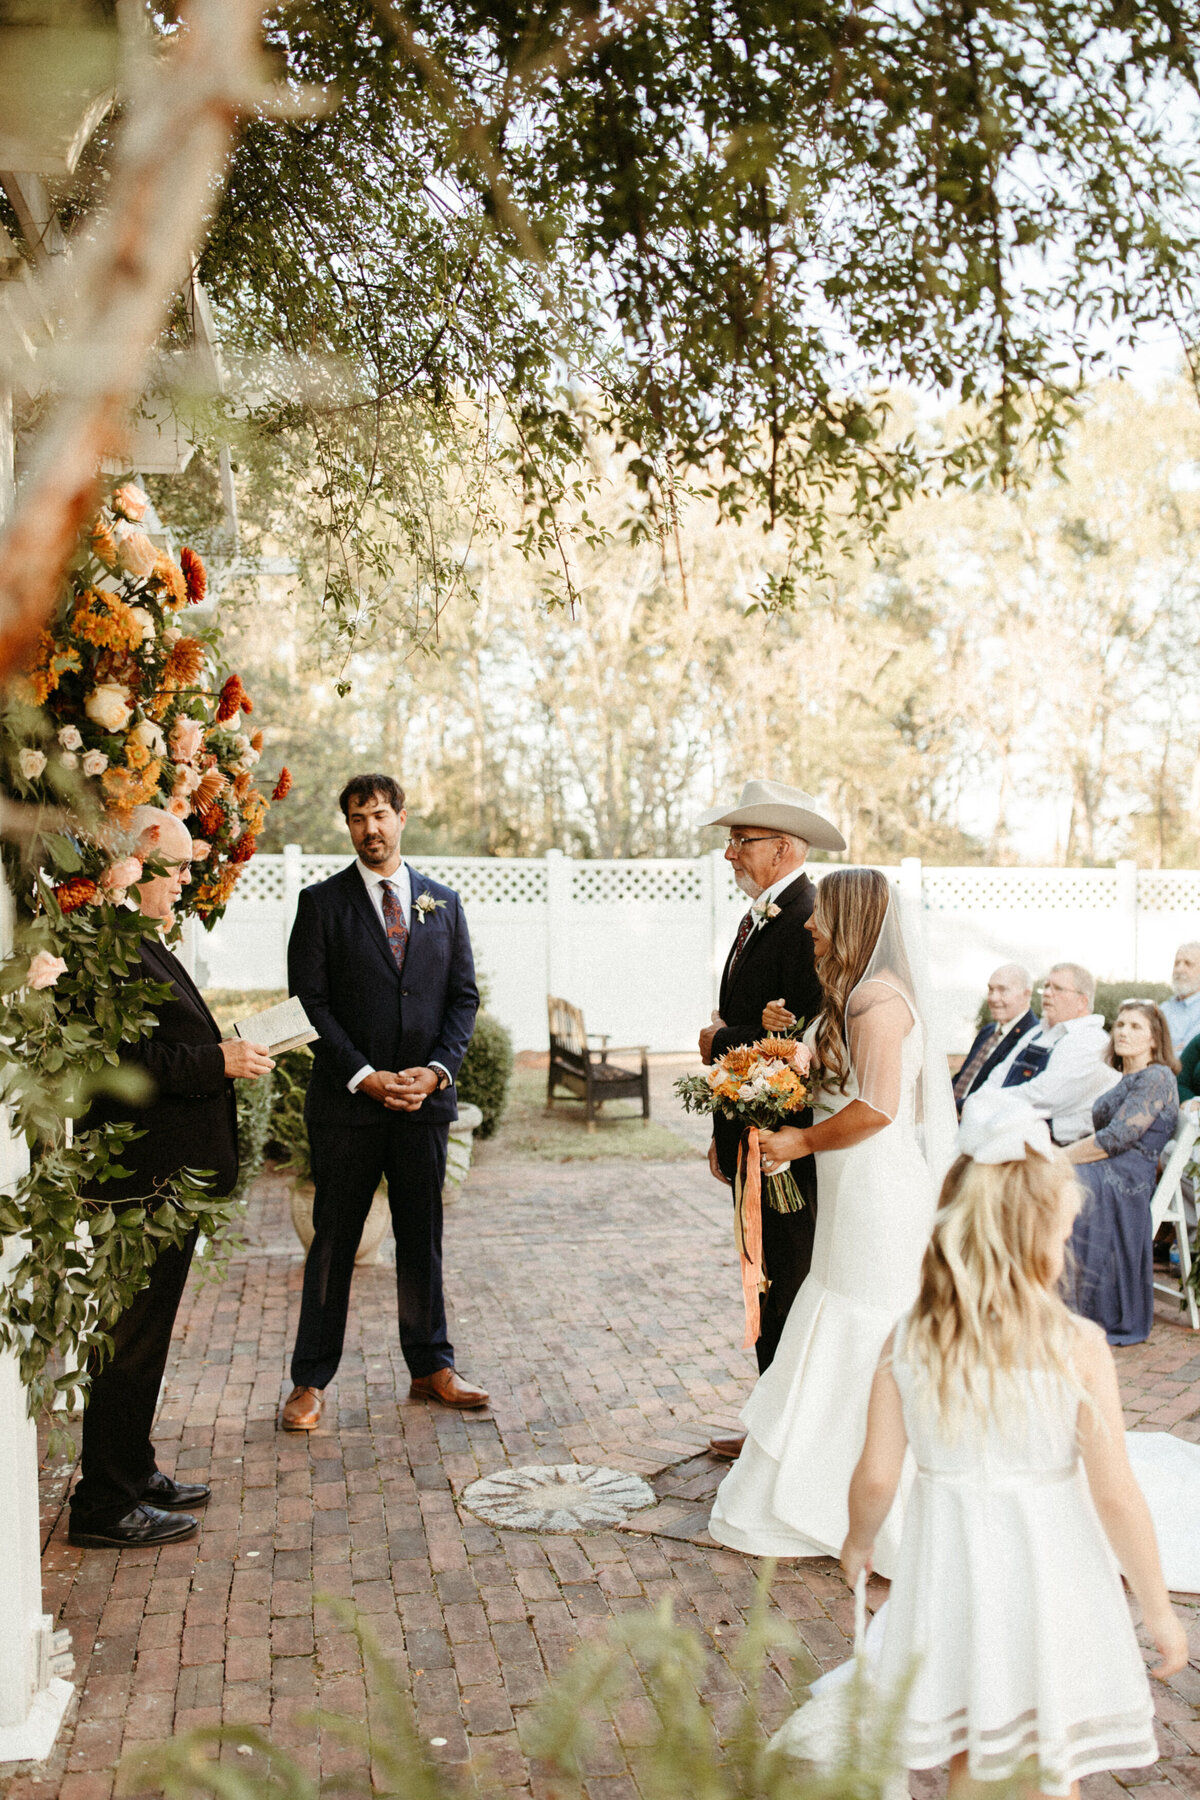 aberdeen-mississippi-tupelo-ms-the-magnolias-antebellum-home-wedding-venue-garden-ceremony4